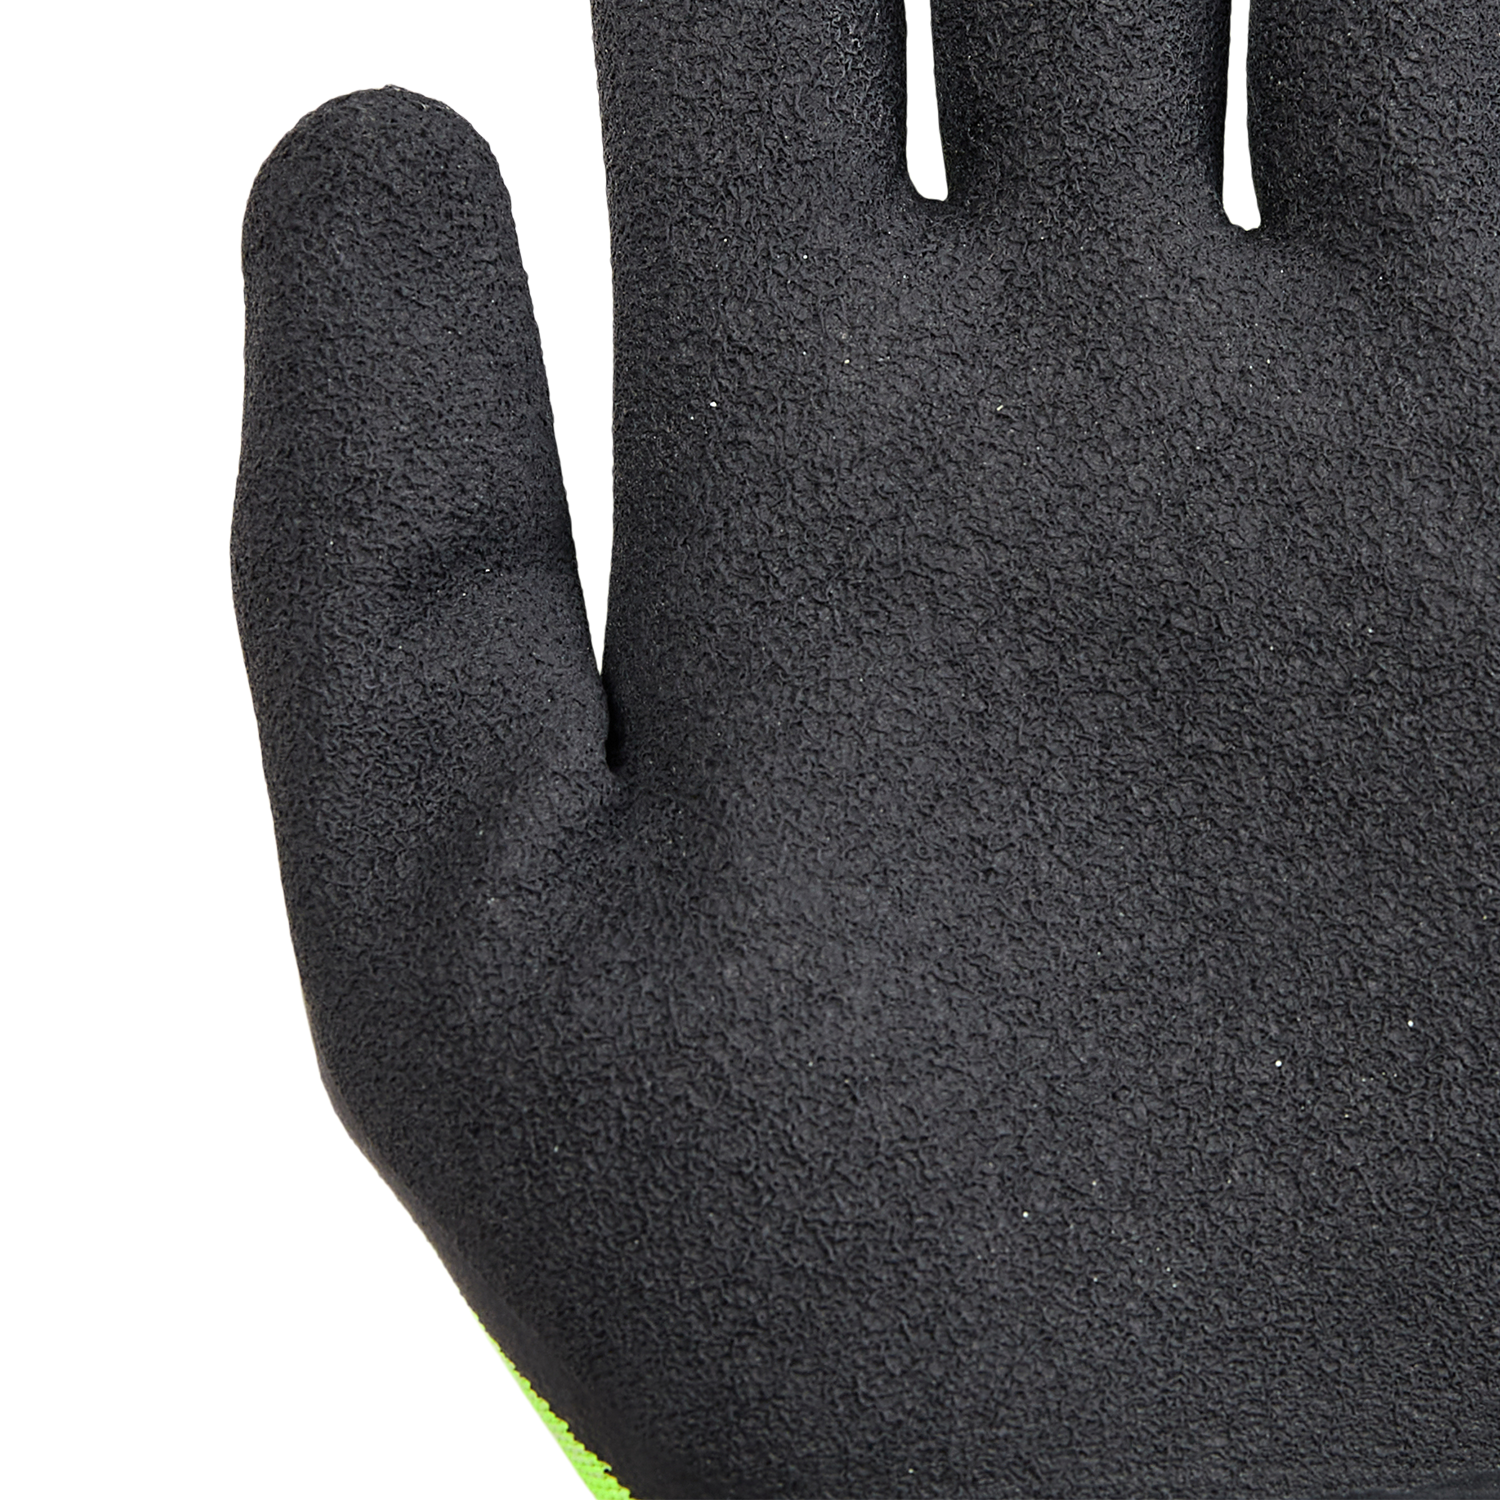 NORSE Eco Light assembly gloves size 9